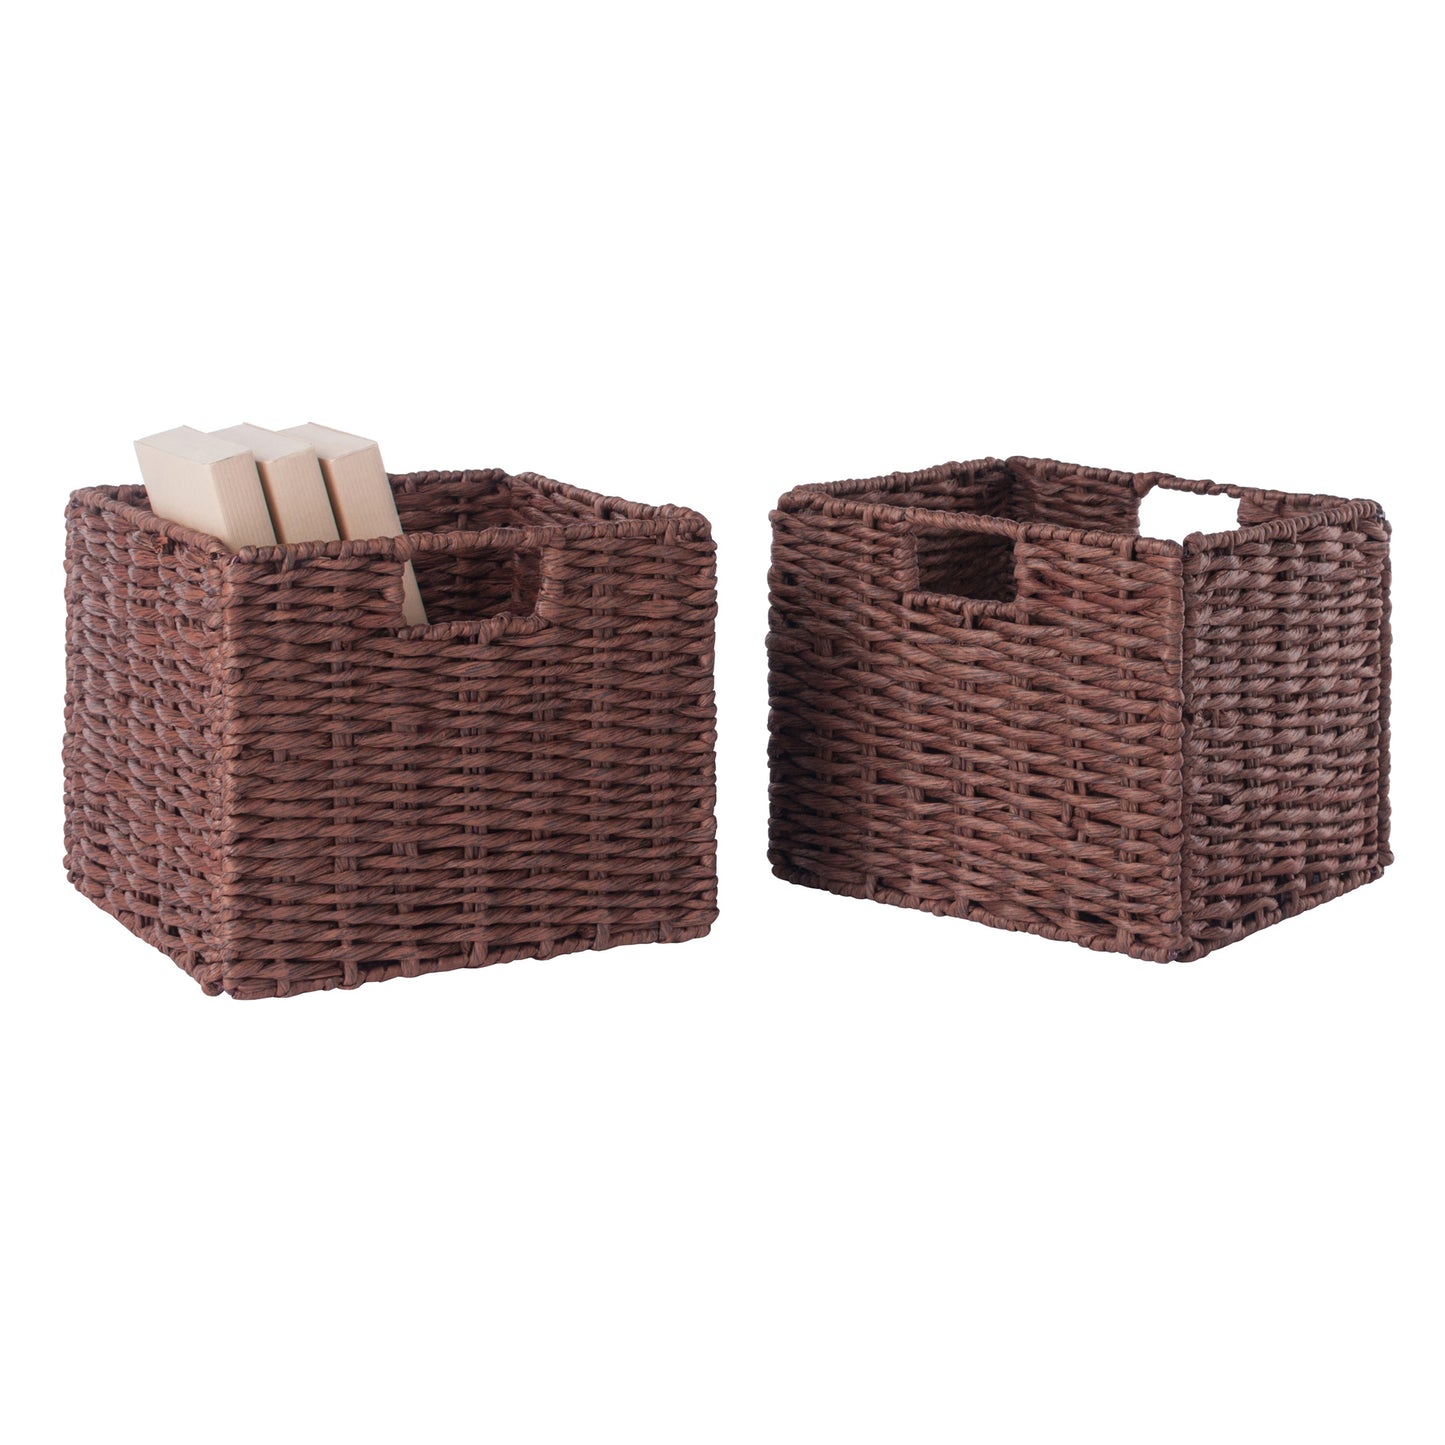 Tessa 2-Pc Woven Rope Basket Set, Foldable, Walnut